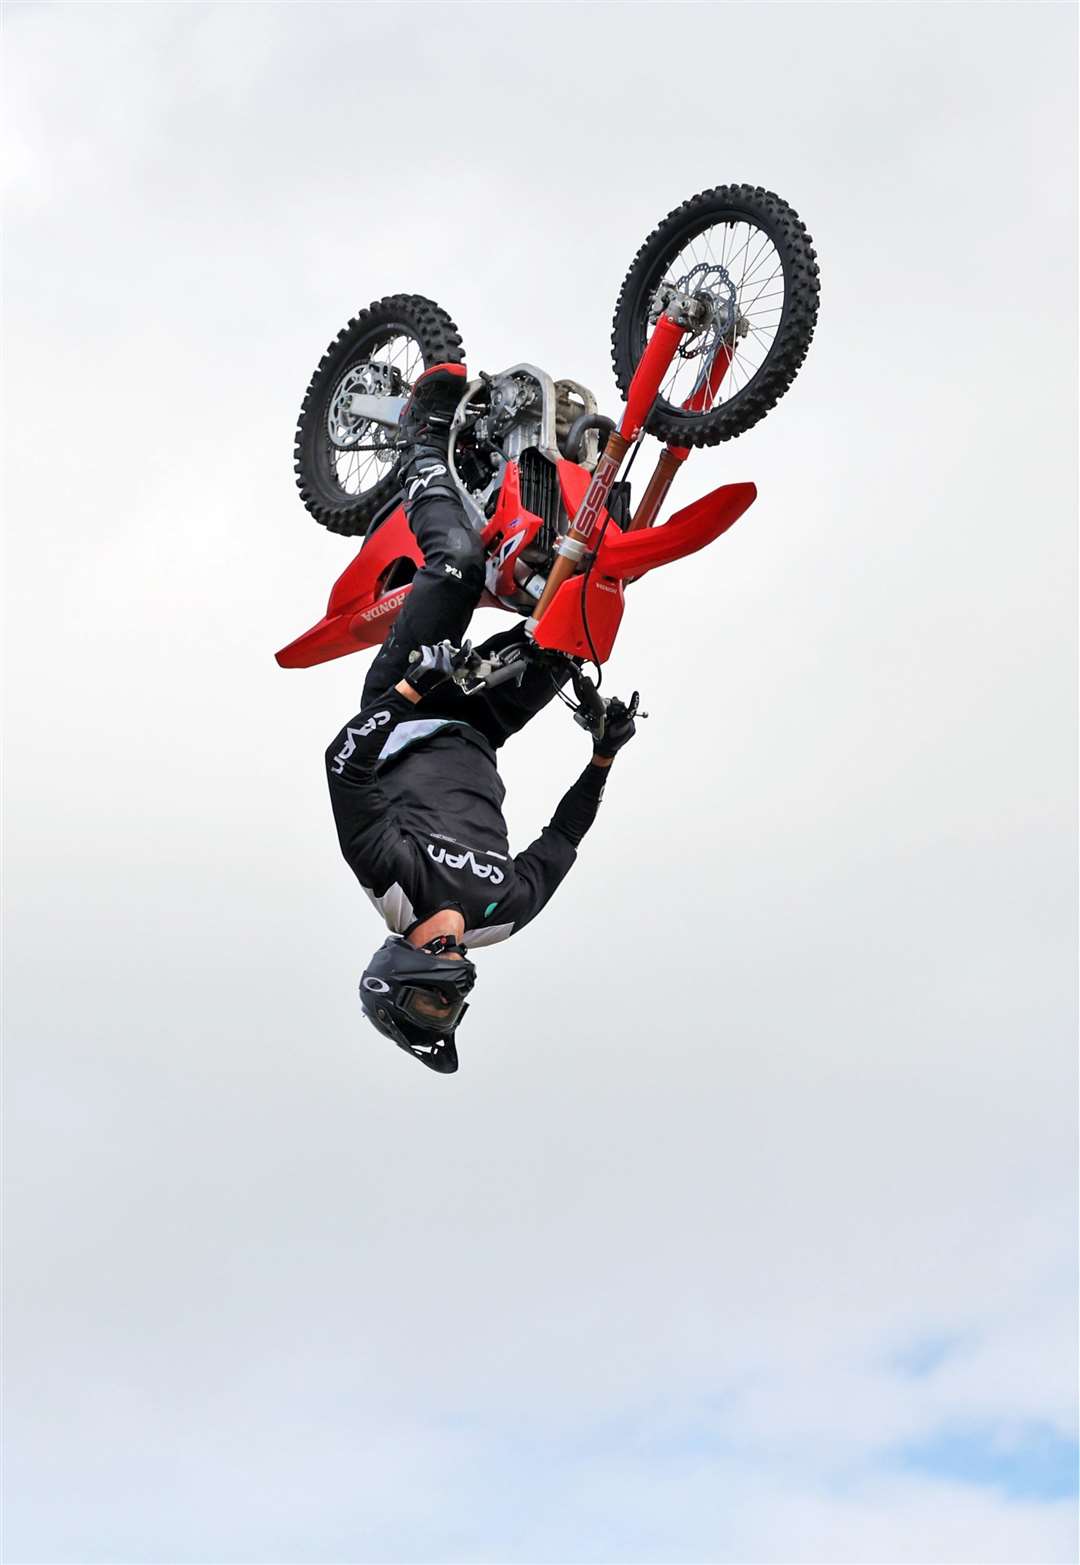 Photographer James Gunn captures the biker in mid flip during Sunday's show.